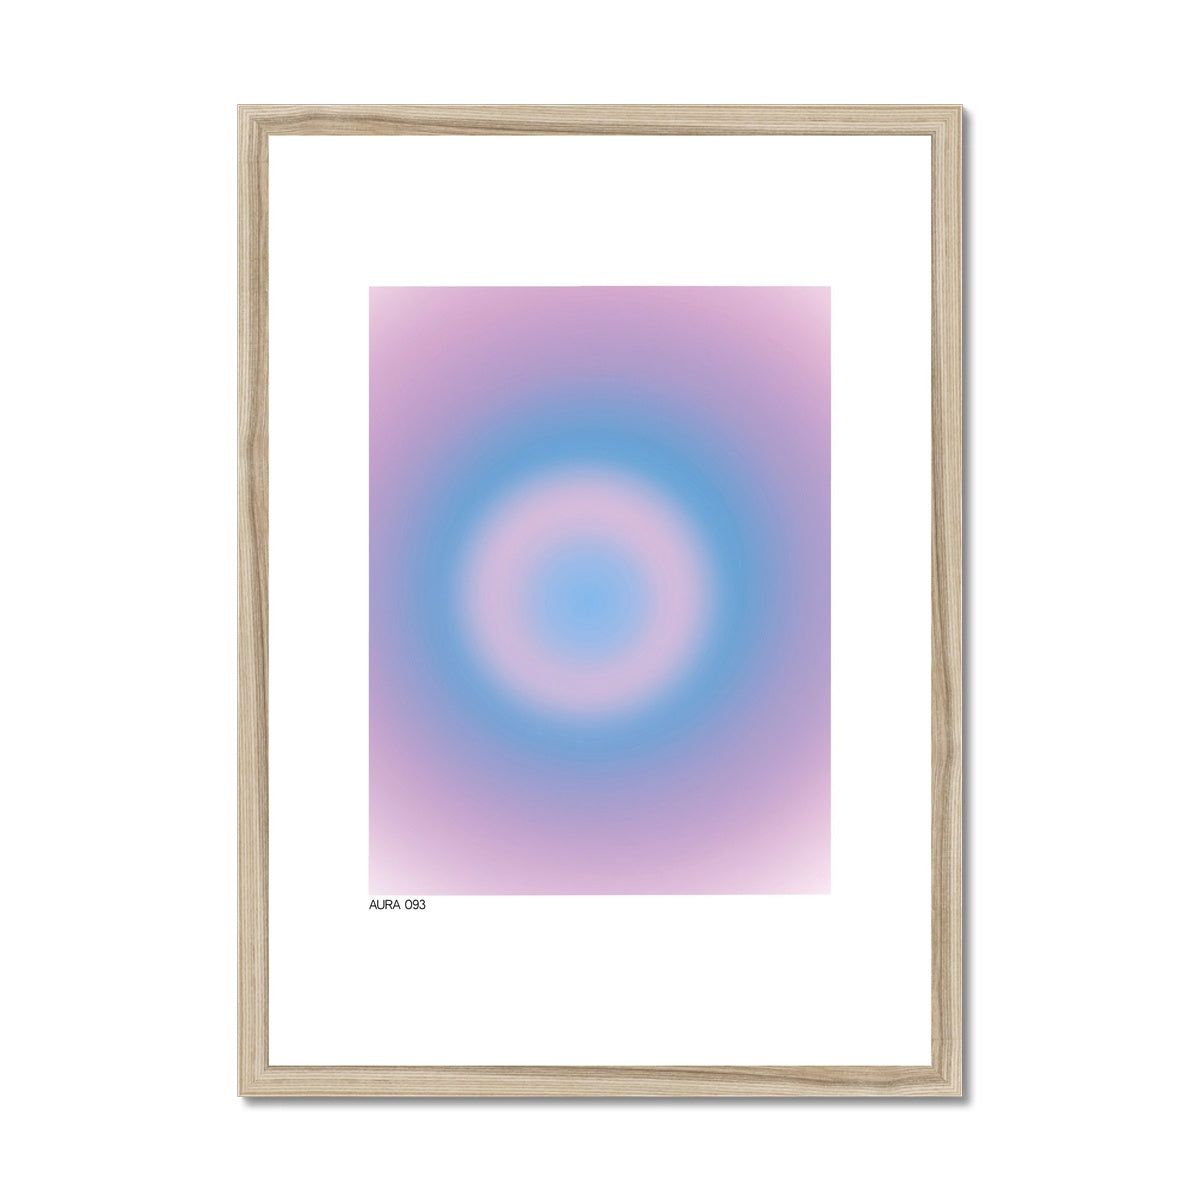 aura 093 Framed & Mounted Print